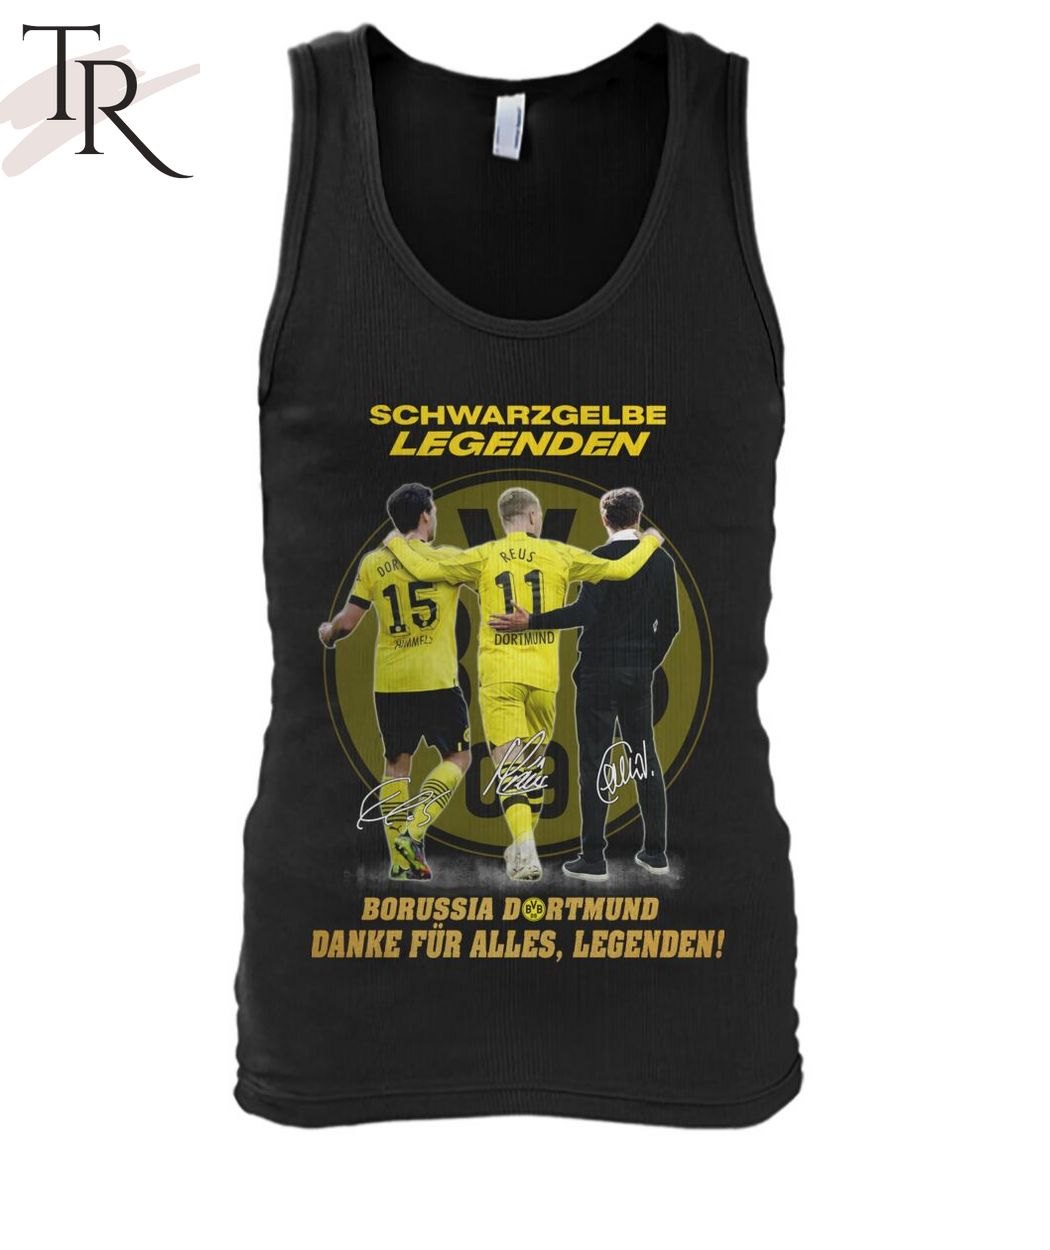 Schwarzgelbe Legenden Borussia Dortmund Danke Fur Alles, Legenden T-Shirt